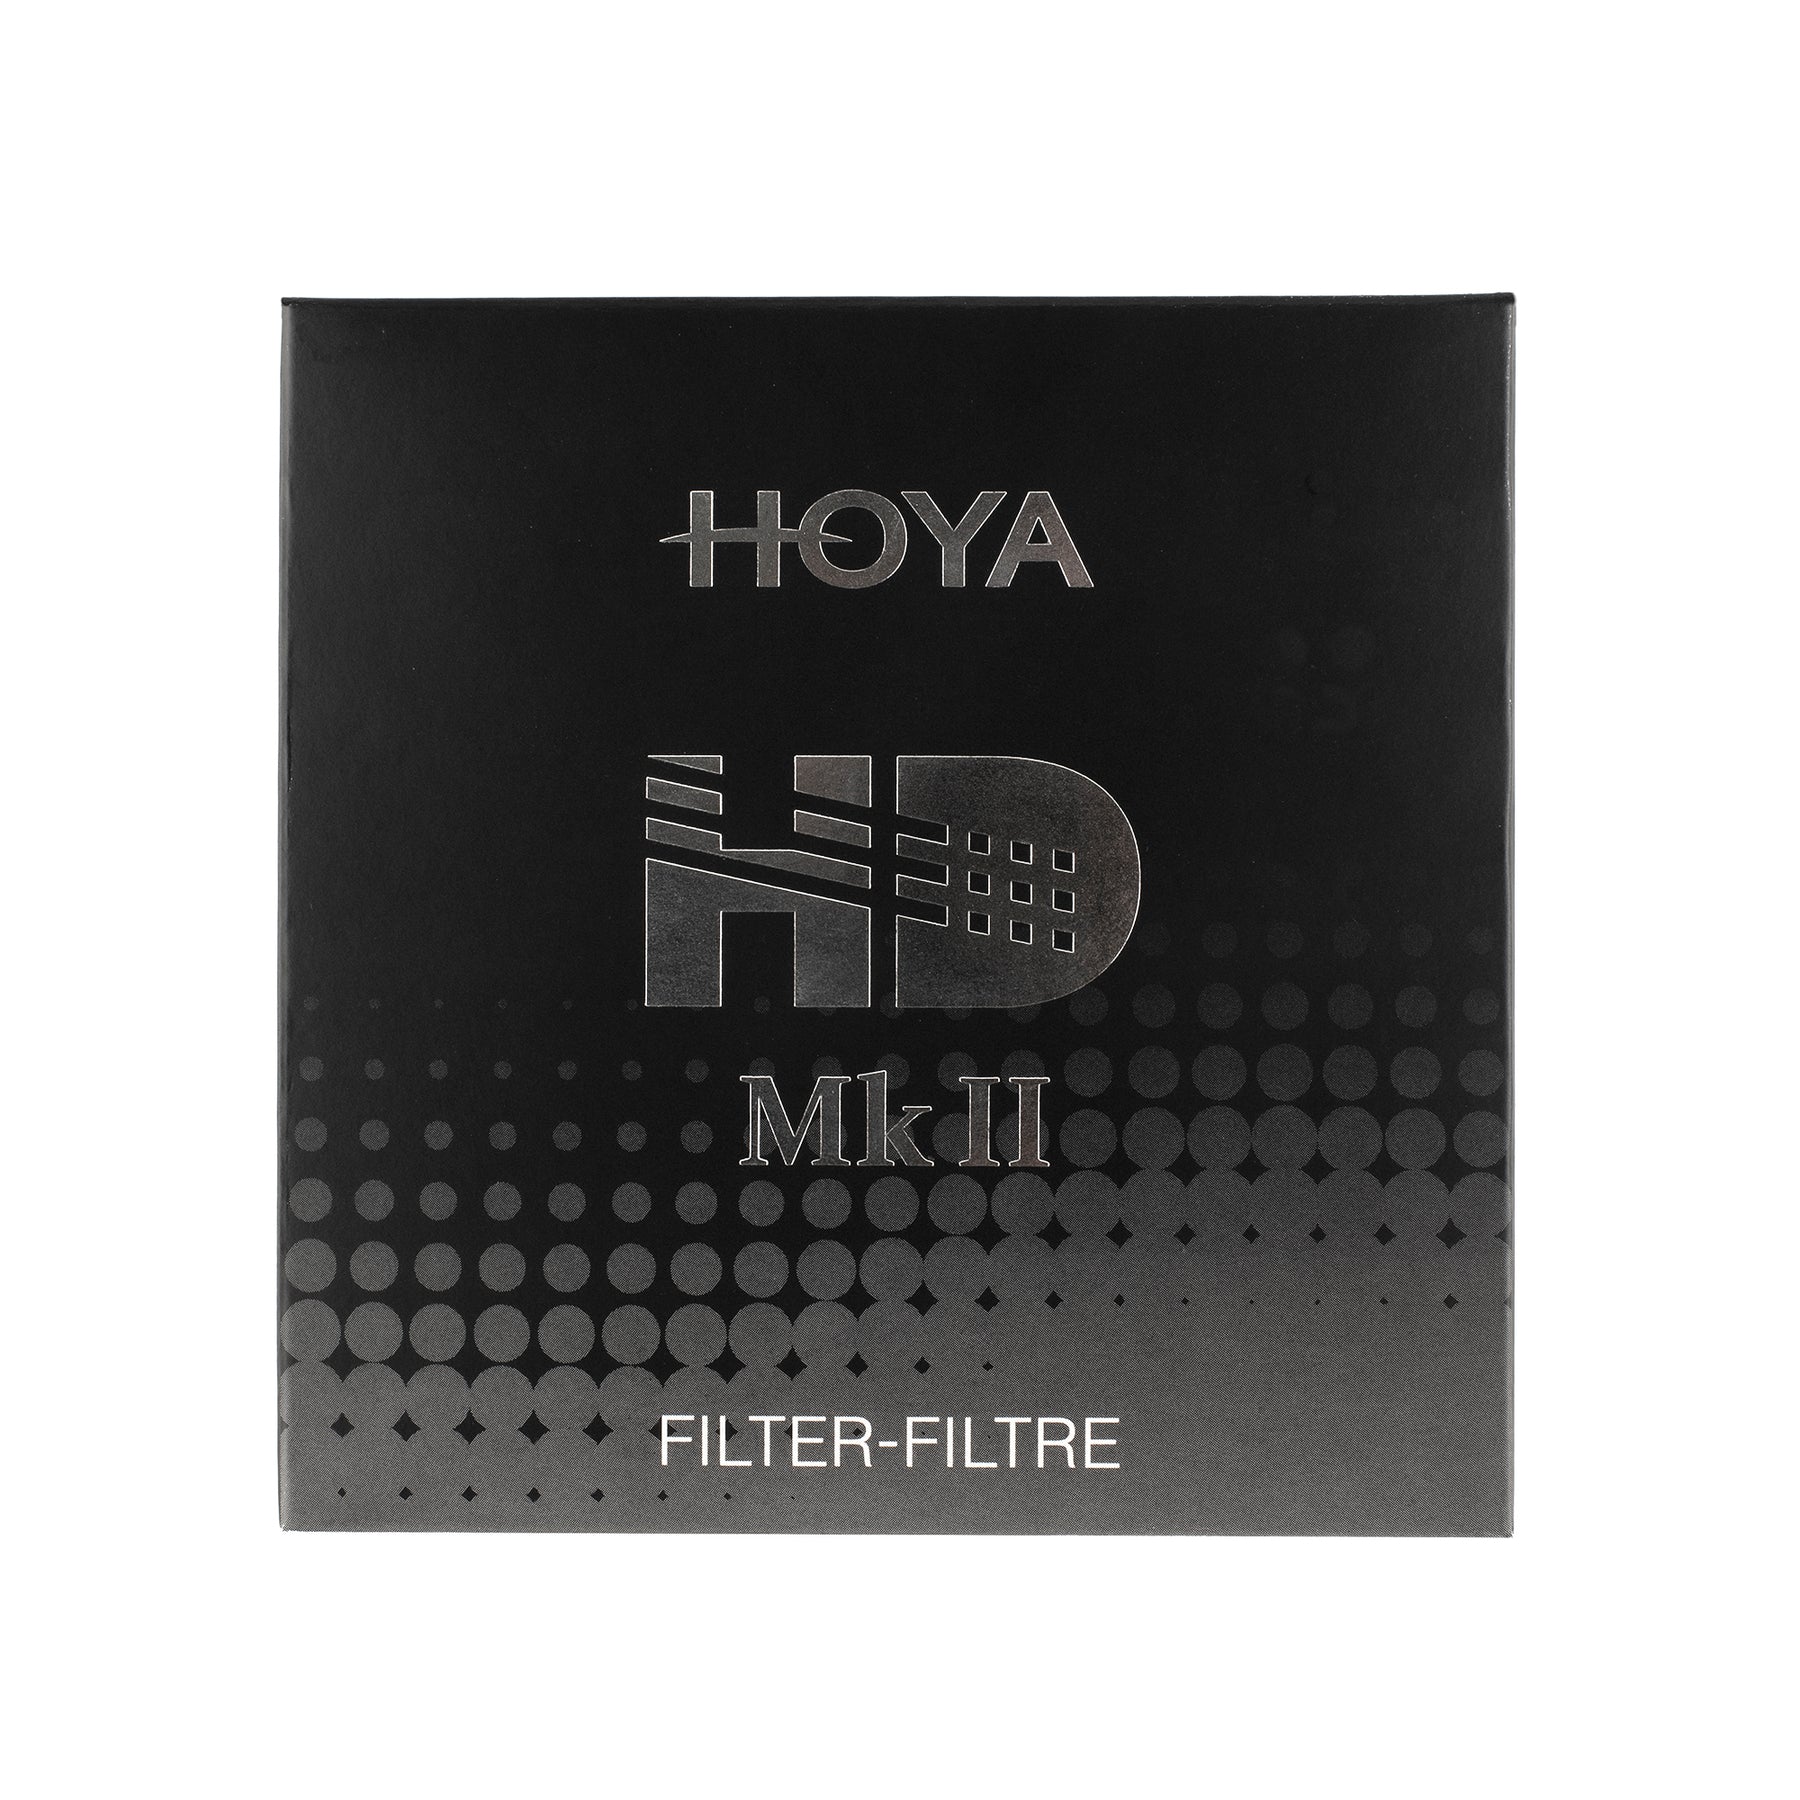 Hoya HD MKII IRND 64 (6-stop) Filter | Free shipping w/ $25